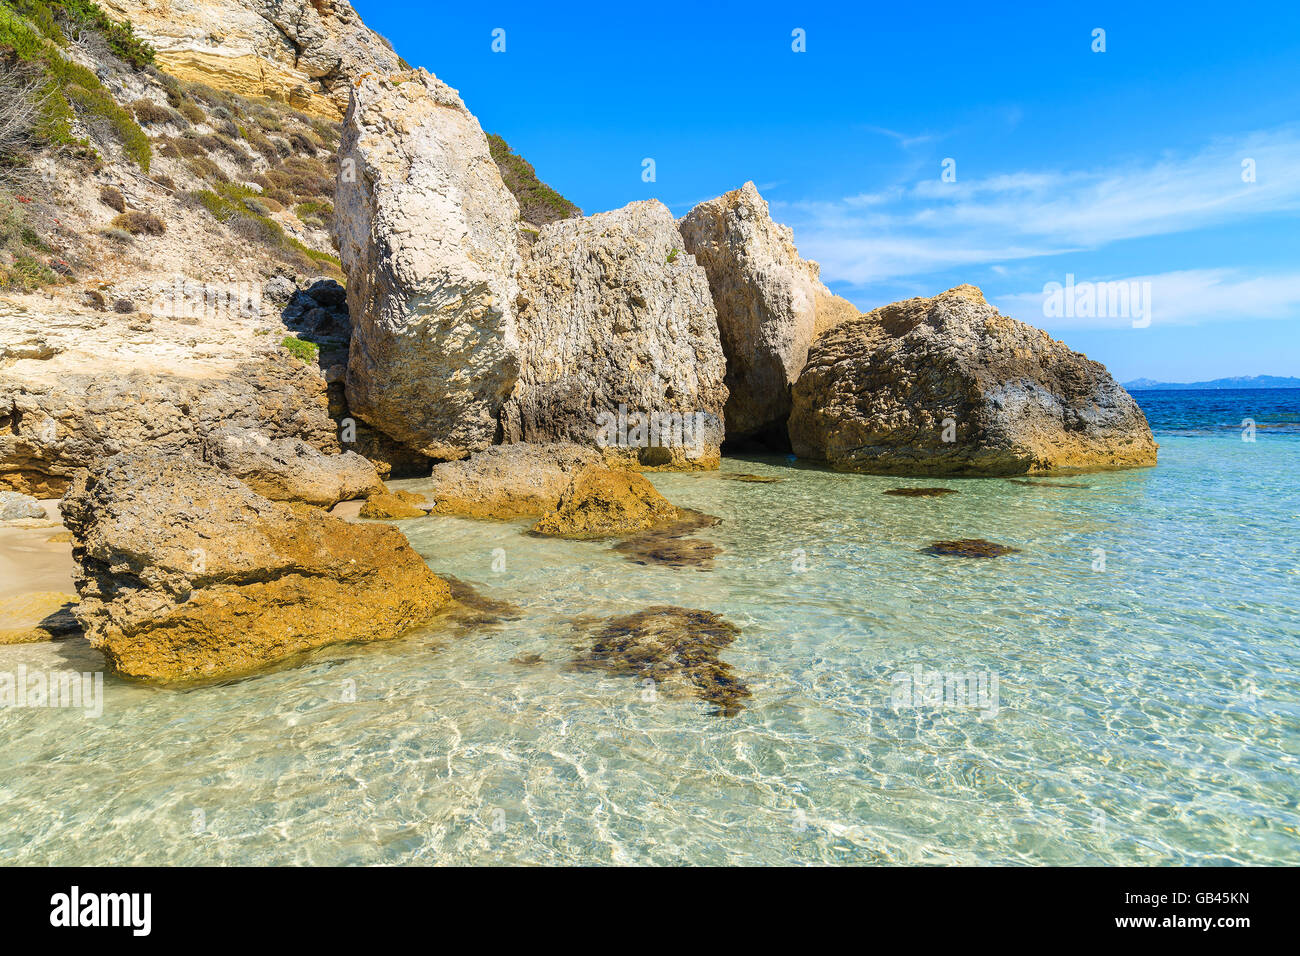 Felsen in kristallklarem Meerwasser am Strand Grande Sperone, Korsika, Frankreich Stockfoto